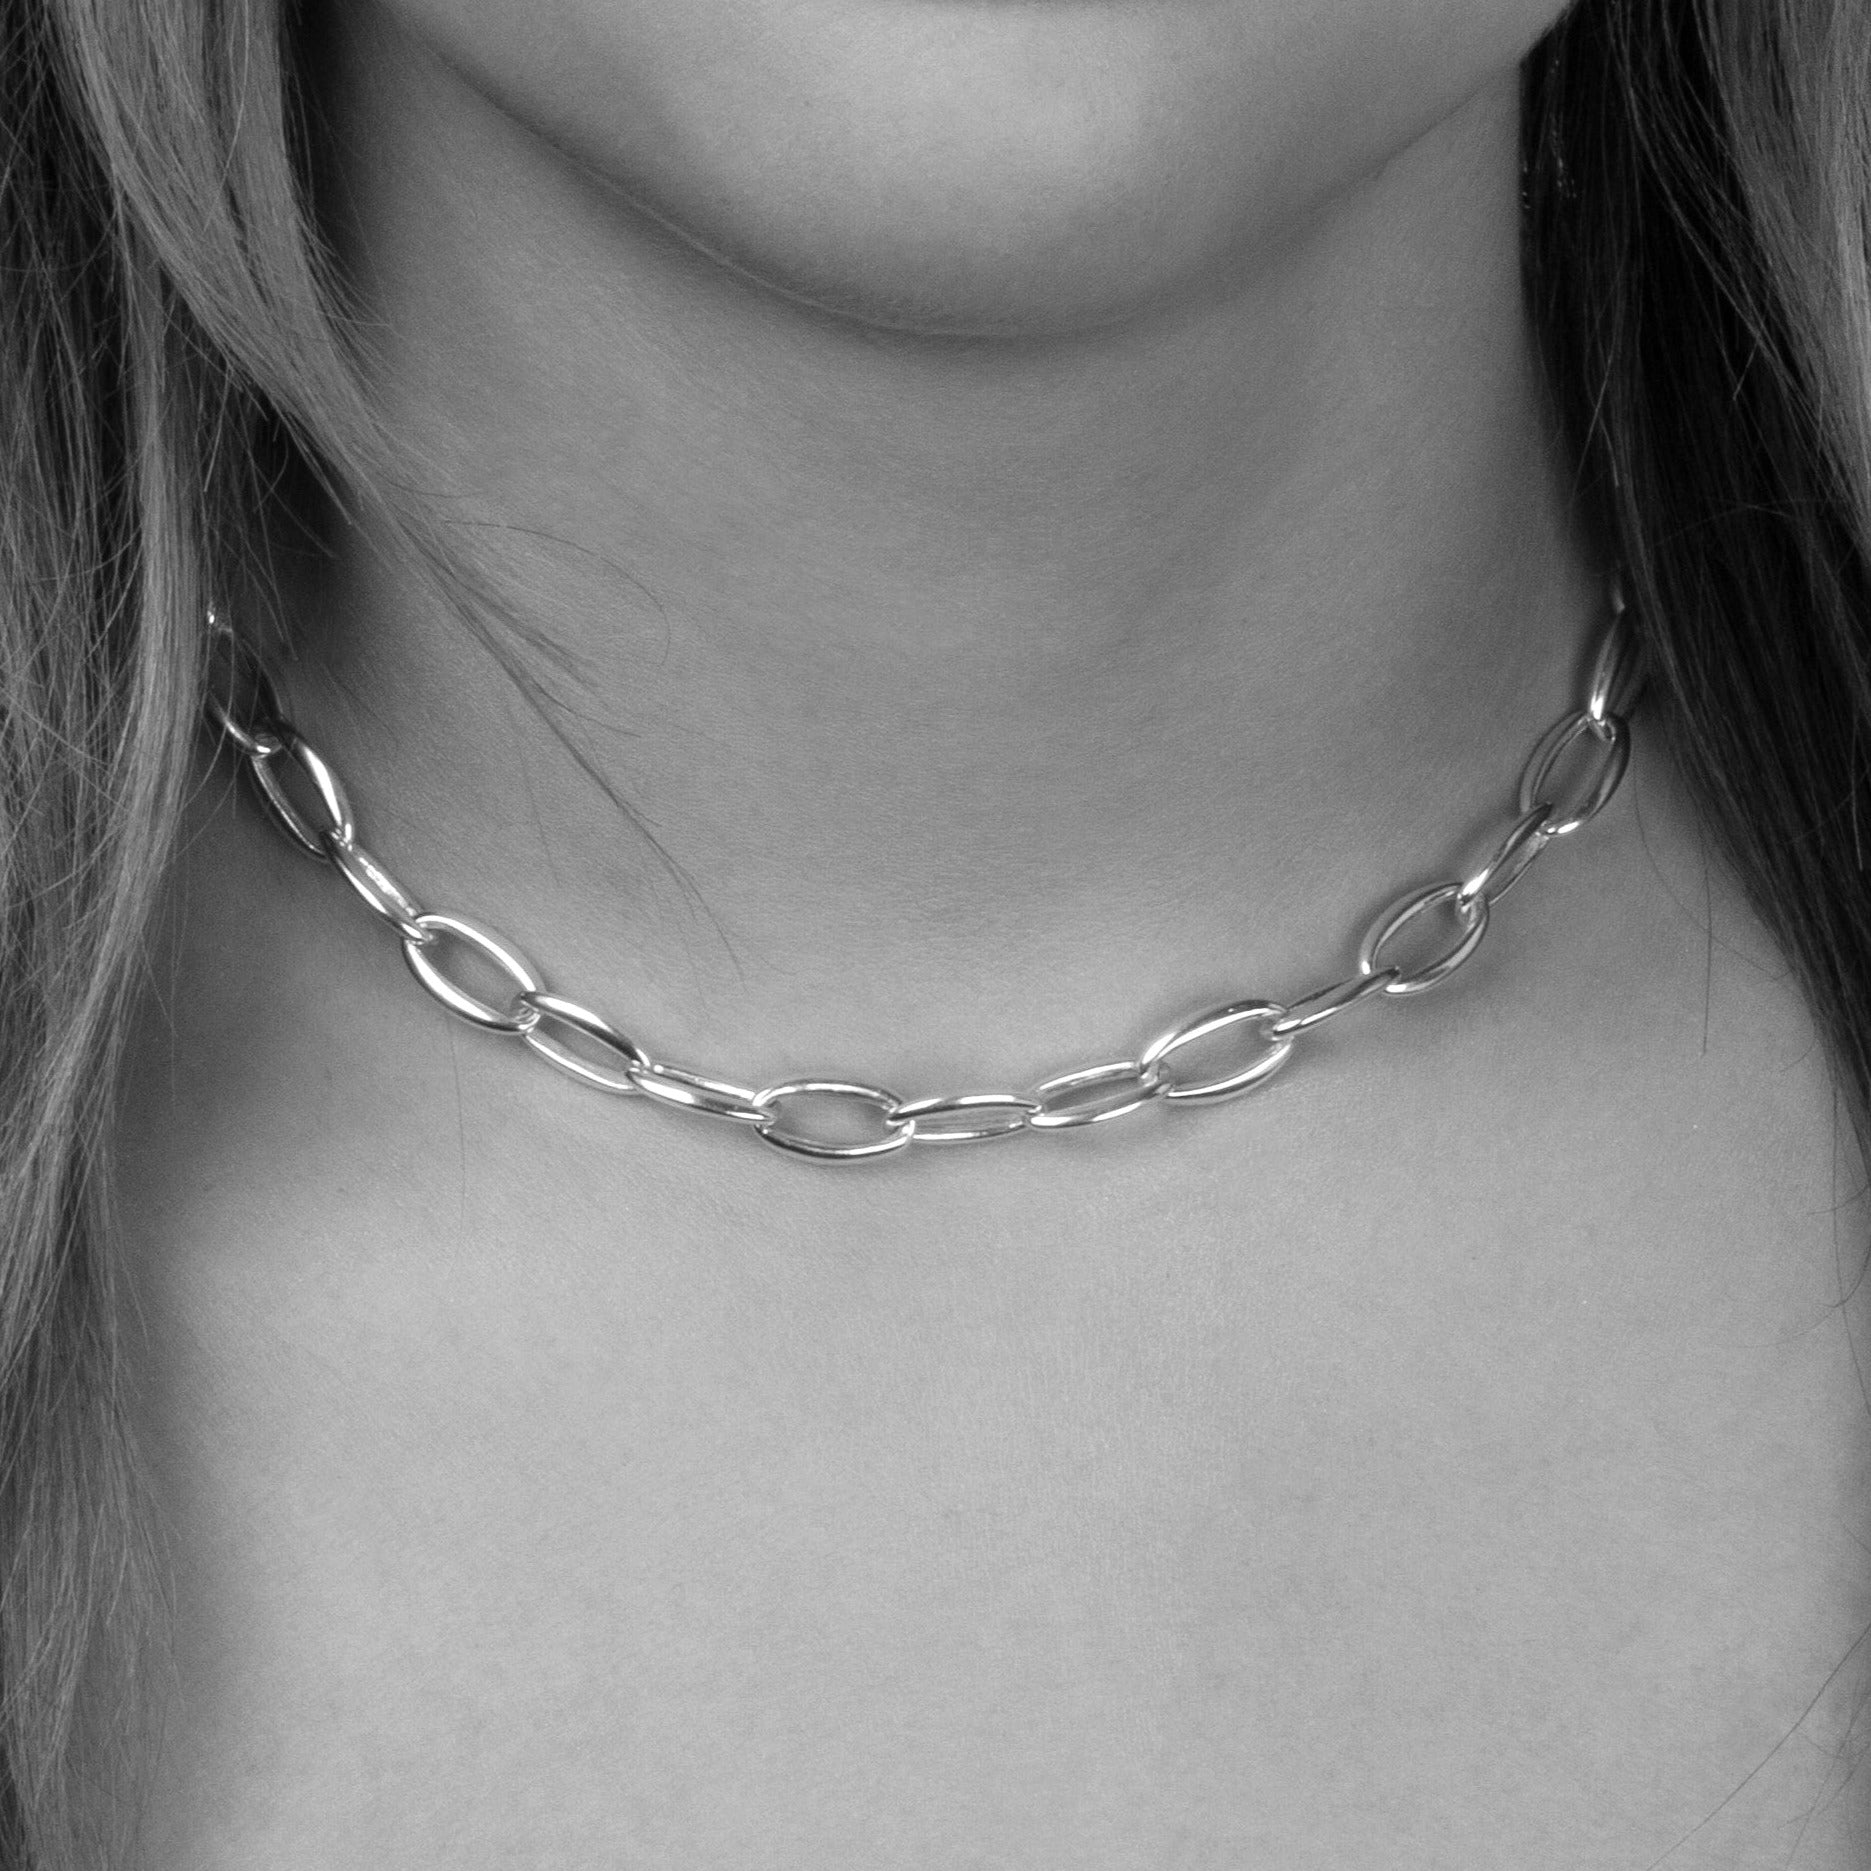 Bloodline Design W-Necklaces The Manhattan Link Necklace Shown on a model